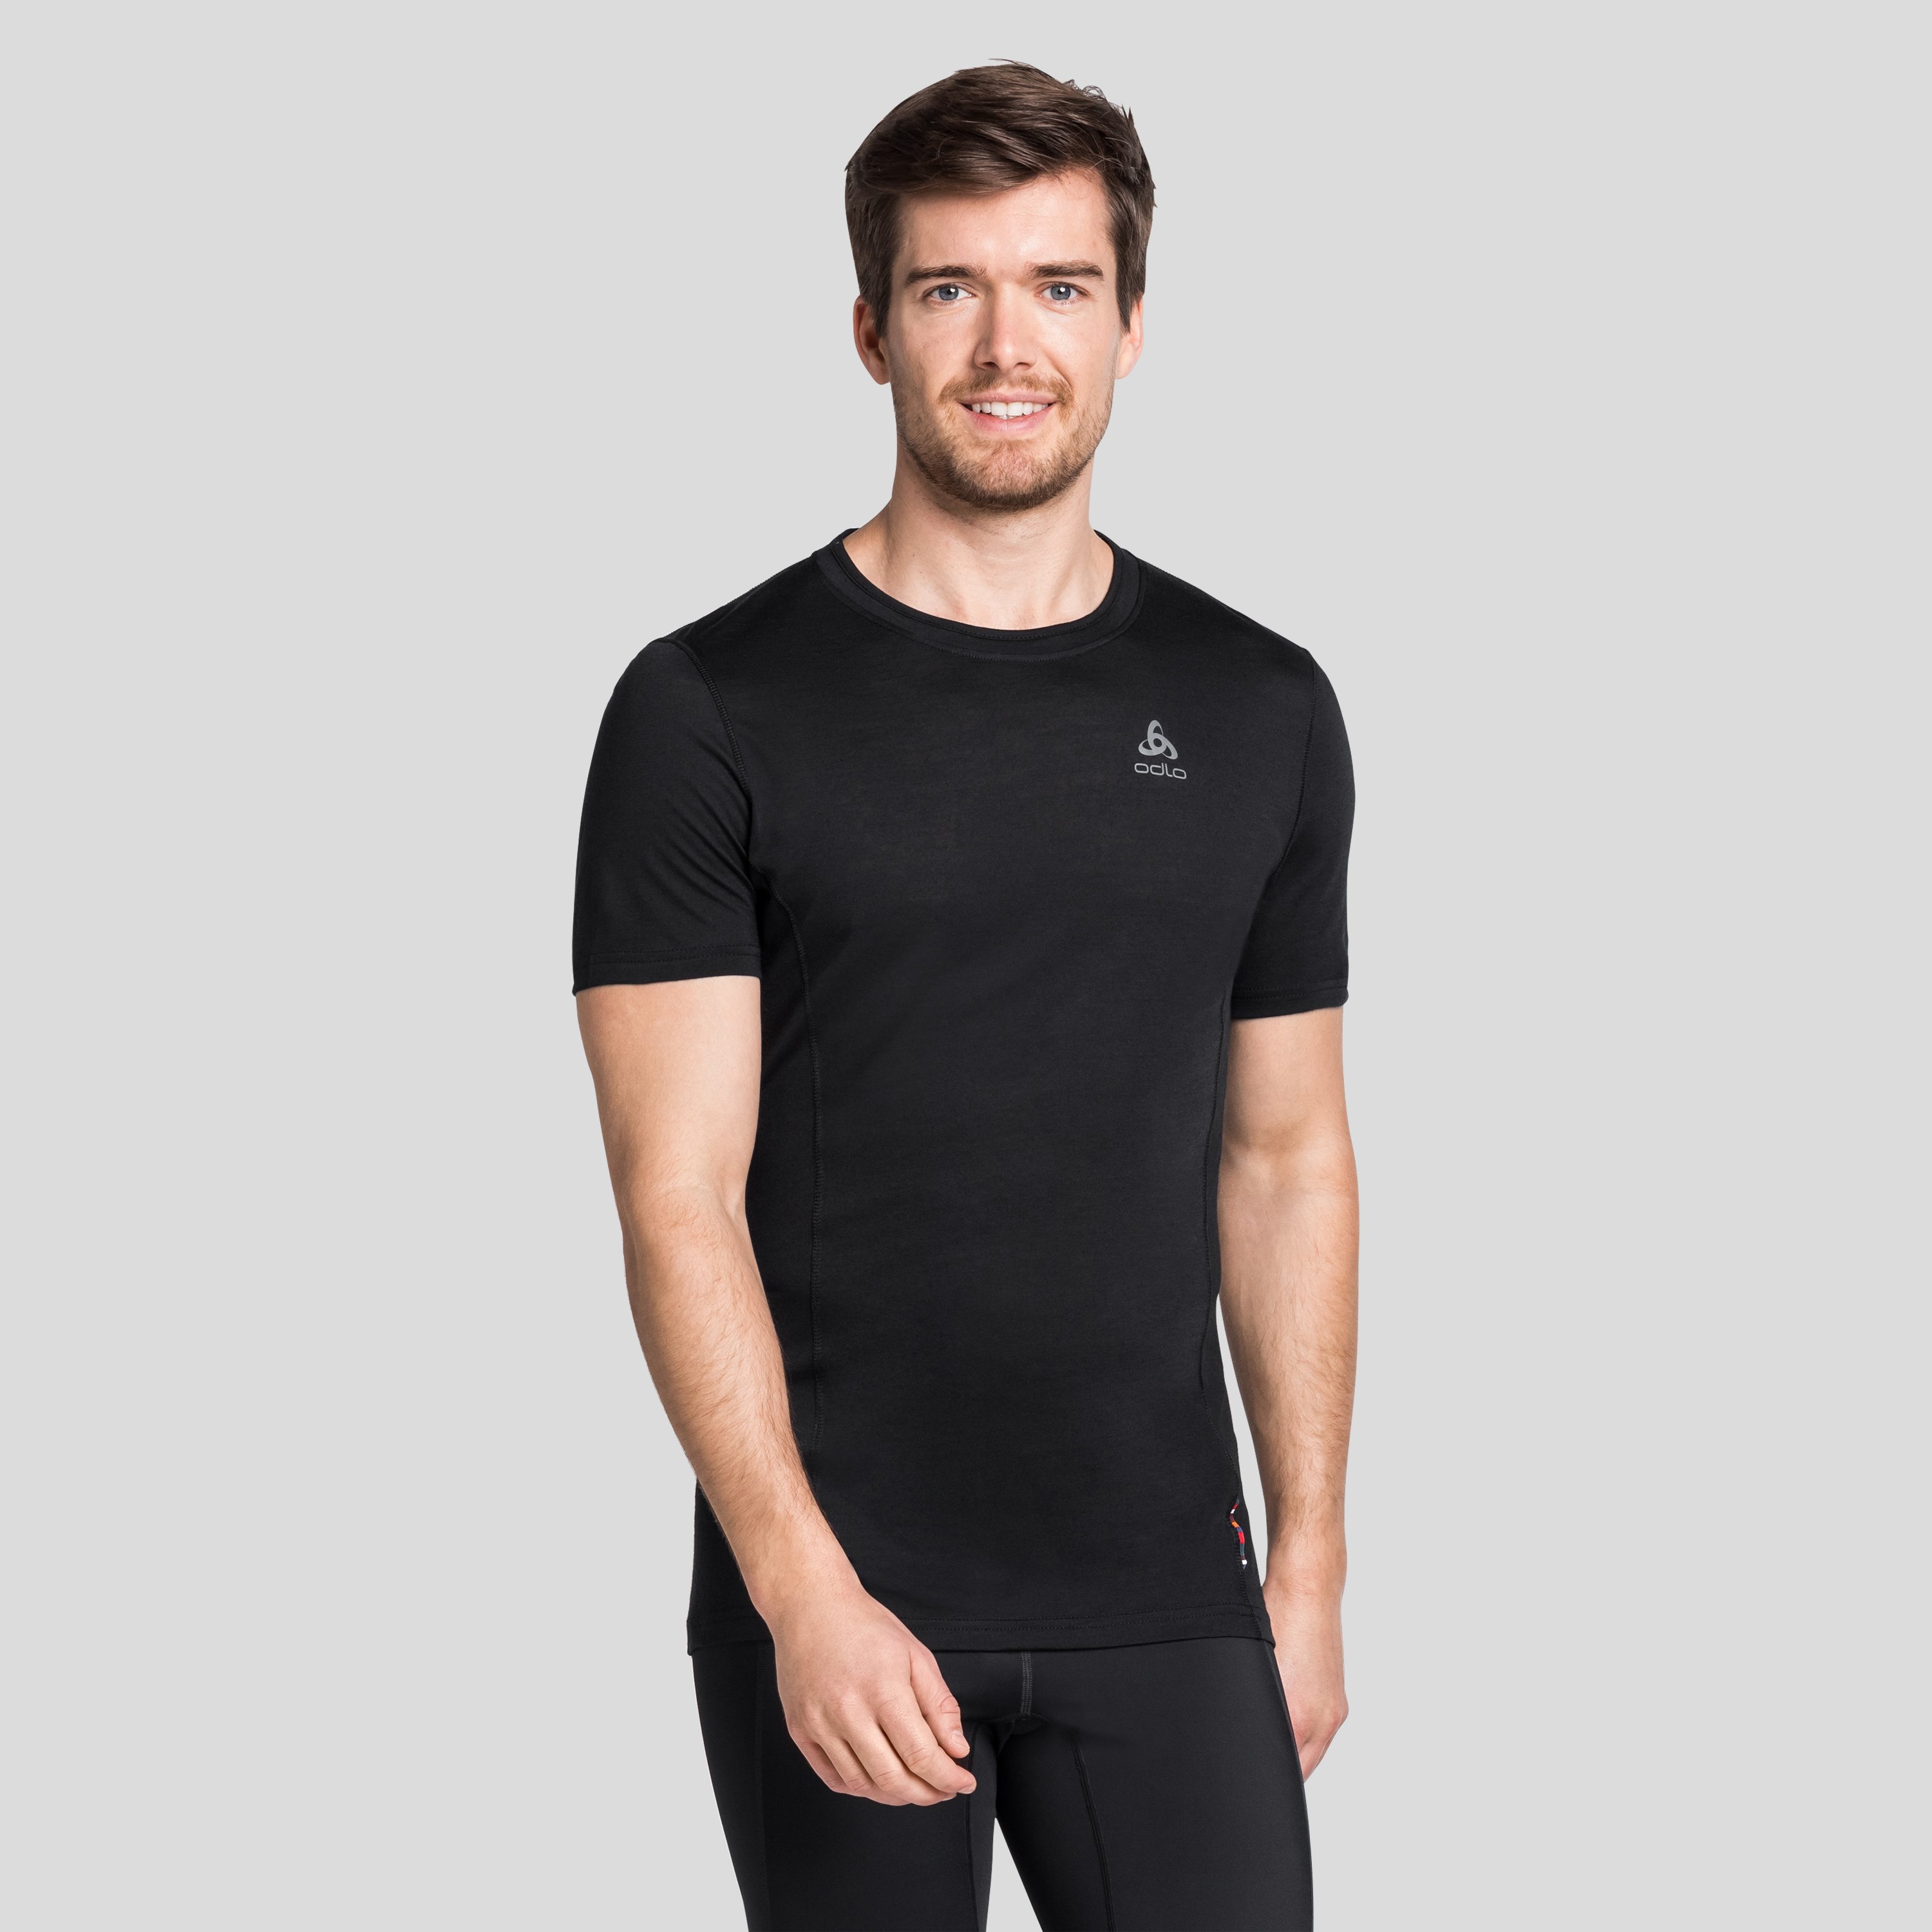 ODLO Performance Wool Light Base Layer T-Shirt für Herren, XXL, schwarz